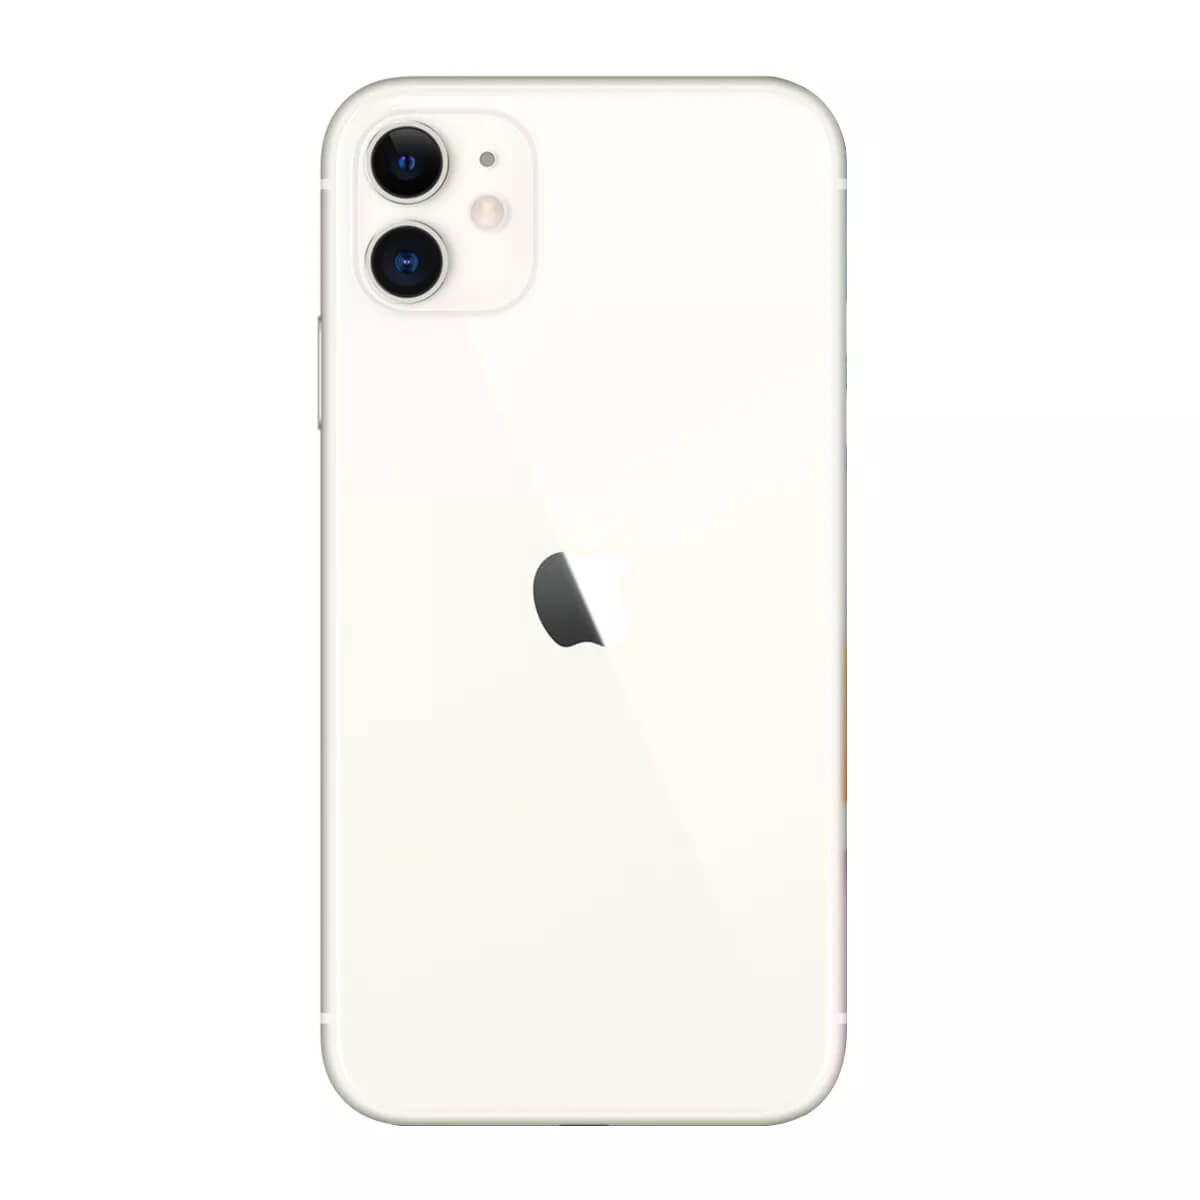 Non Active Apple iPhone 11 256GB - White